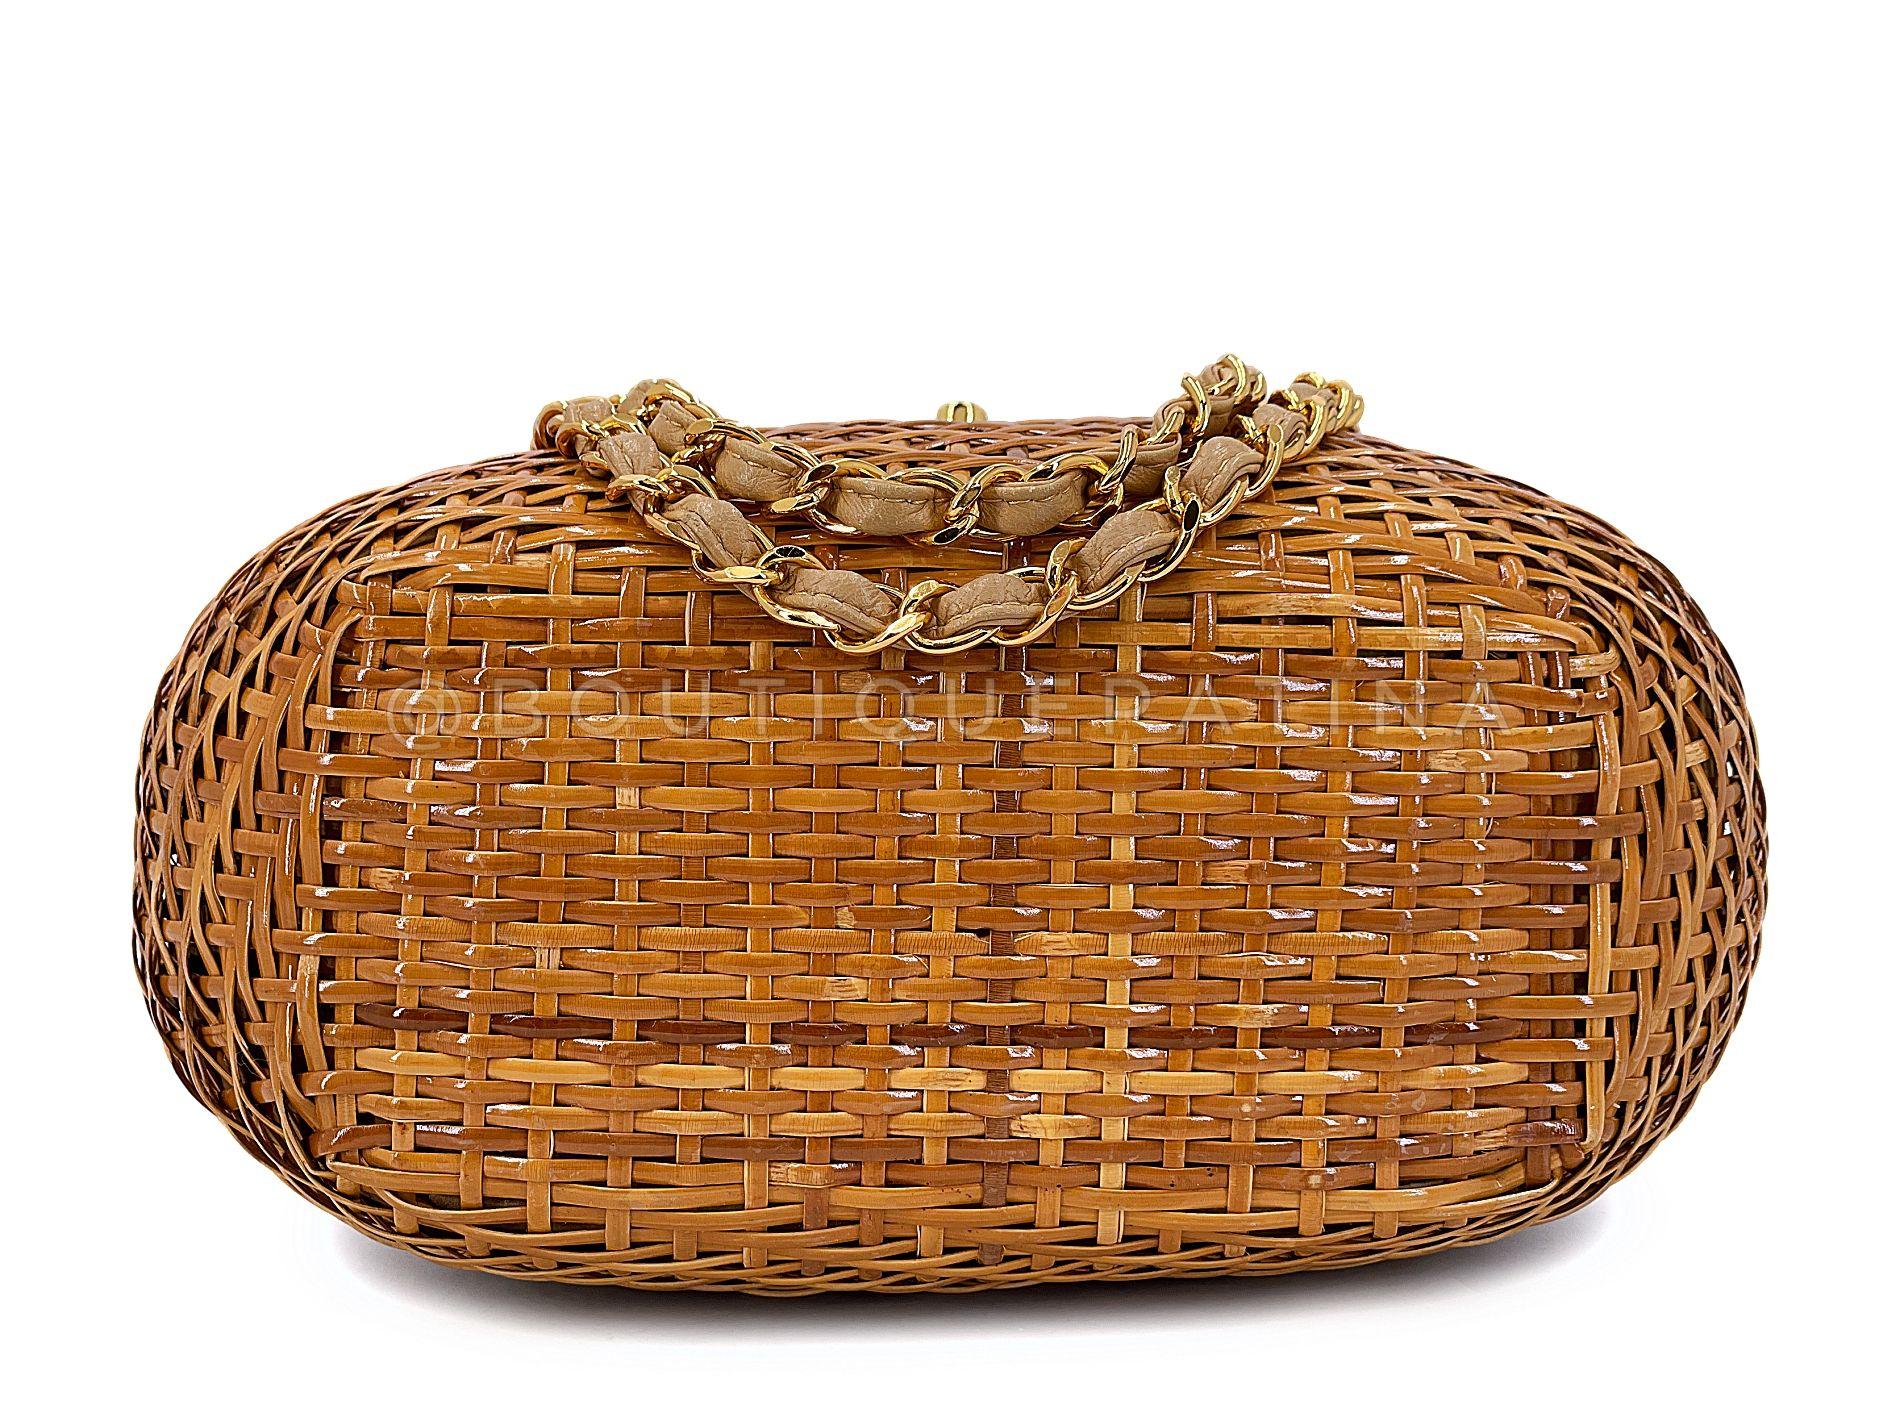 Chanel 1997 Vintage Wicker and Beige Lambskin Basket Vanity Bag 67876 For Sale 2